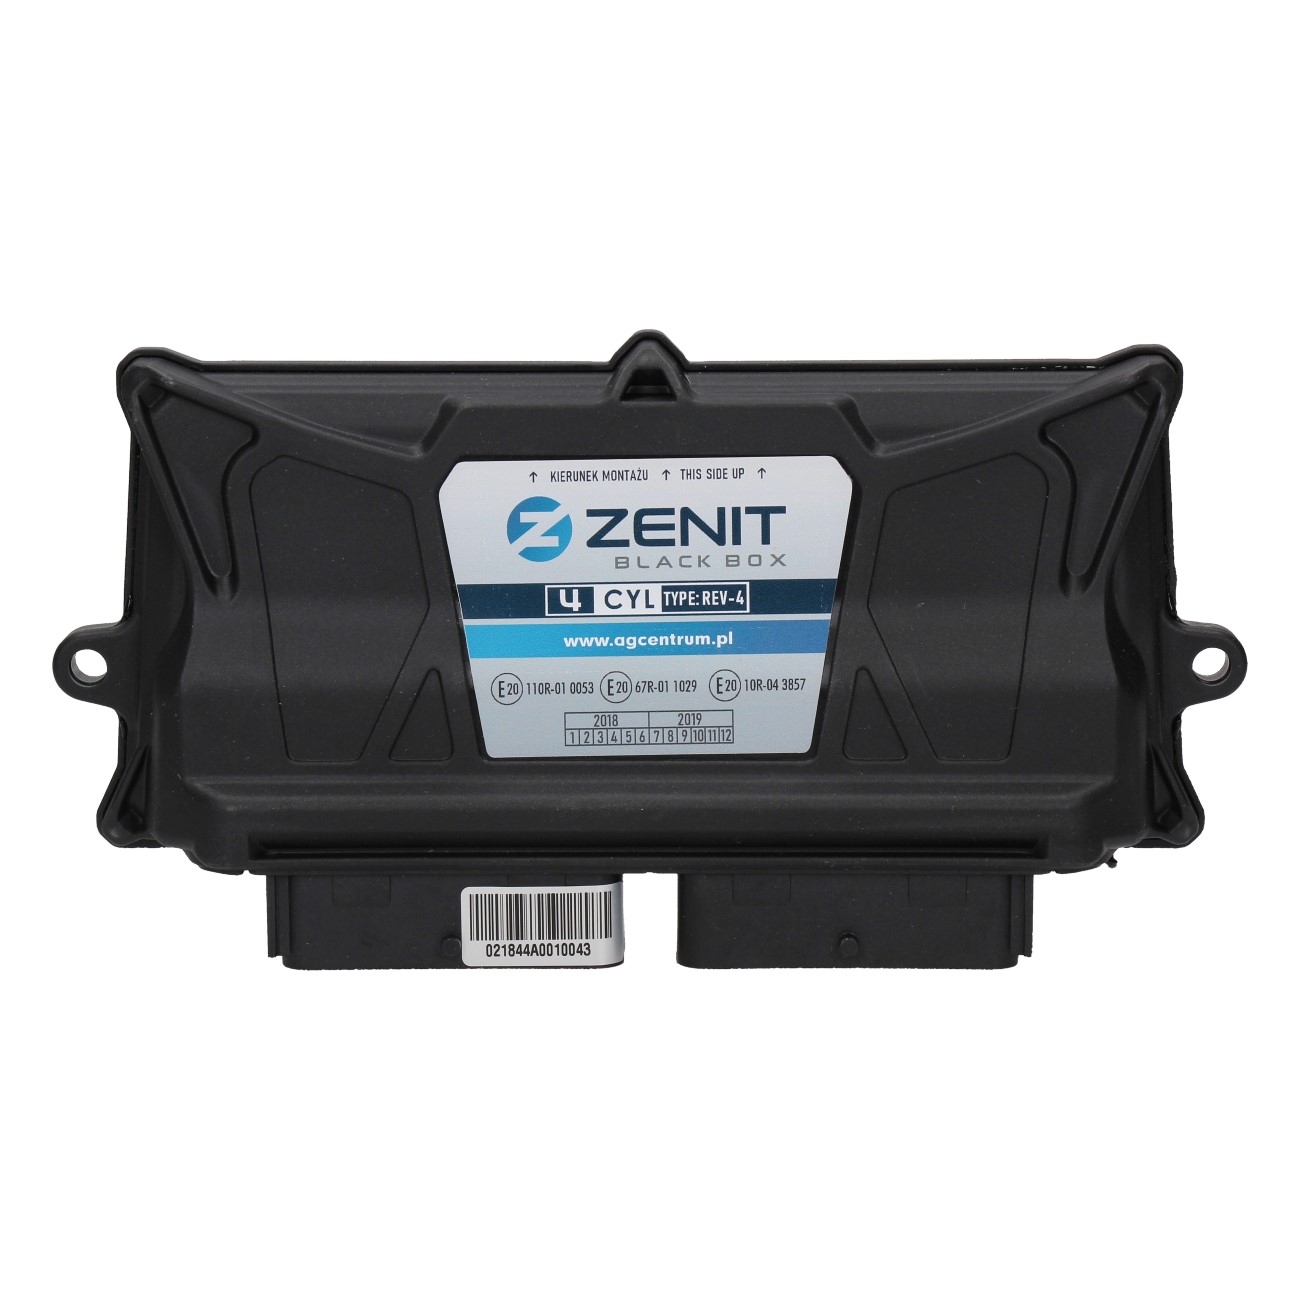 AG Centrum - Centrala AGC Zenit Black Box 4 cyl